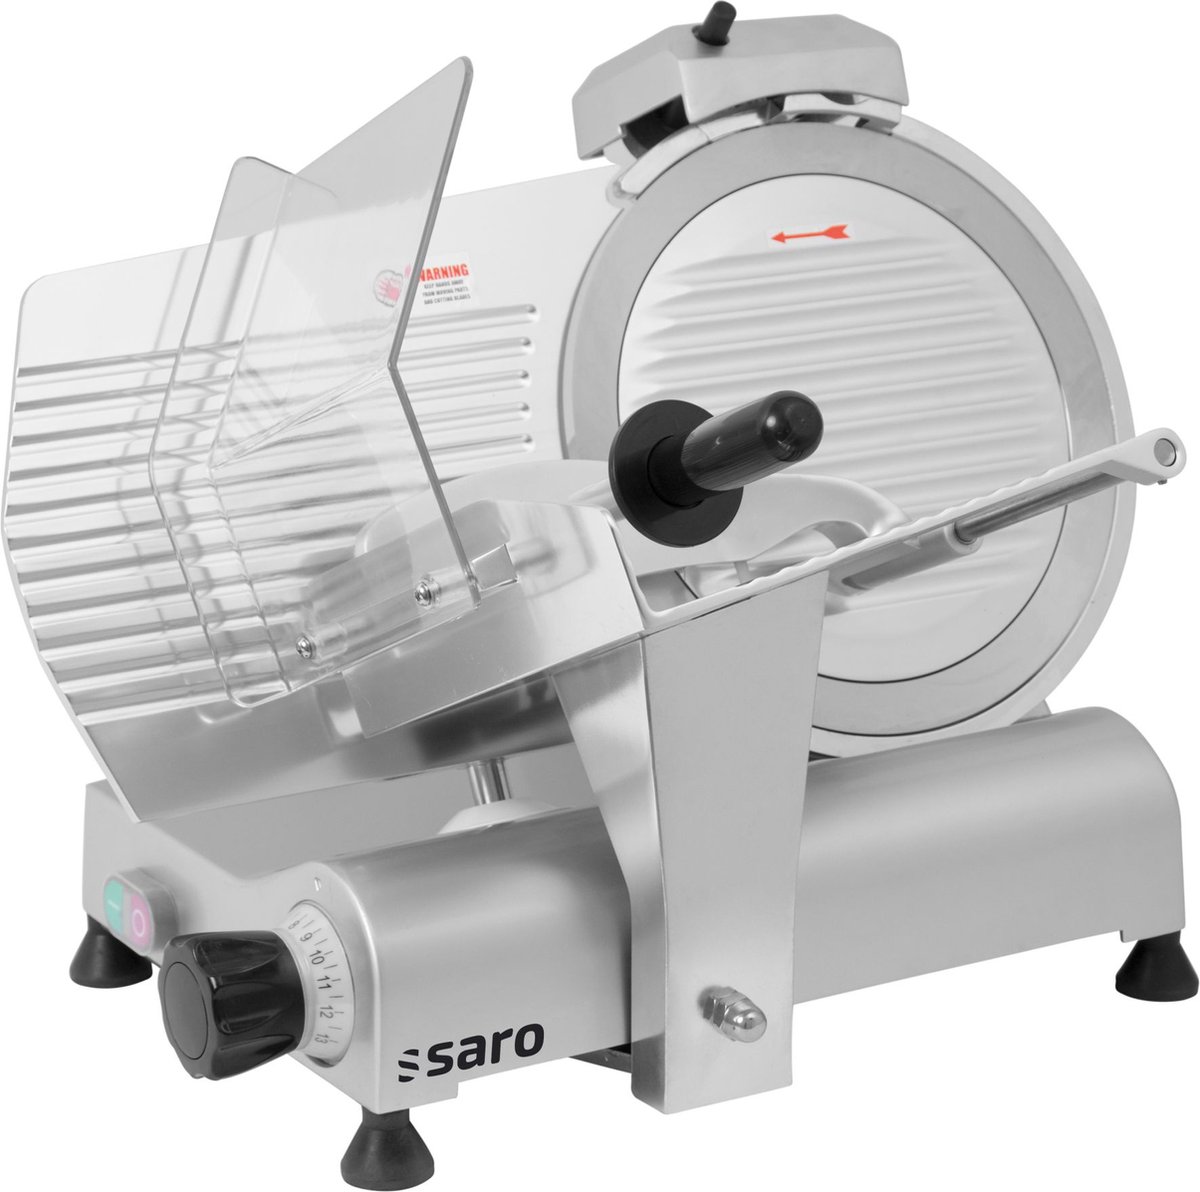 Saro AS 300 snijmachine Electrisch 250 W Metallic Metaal